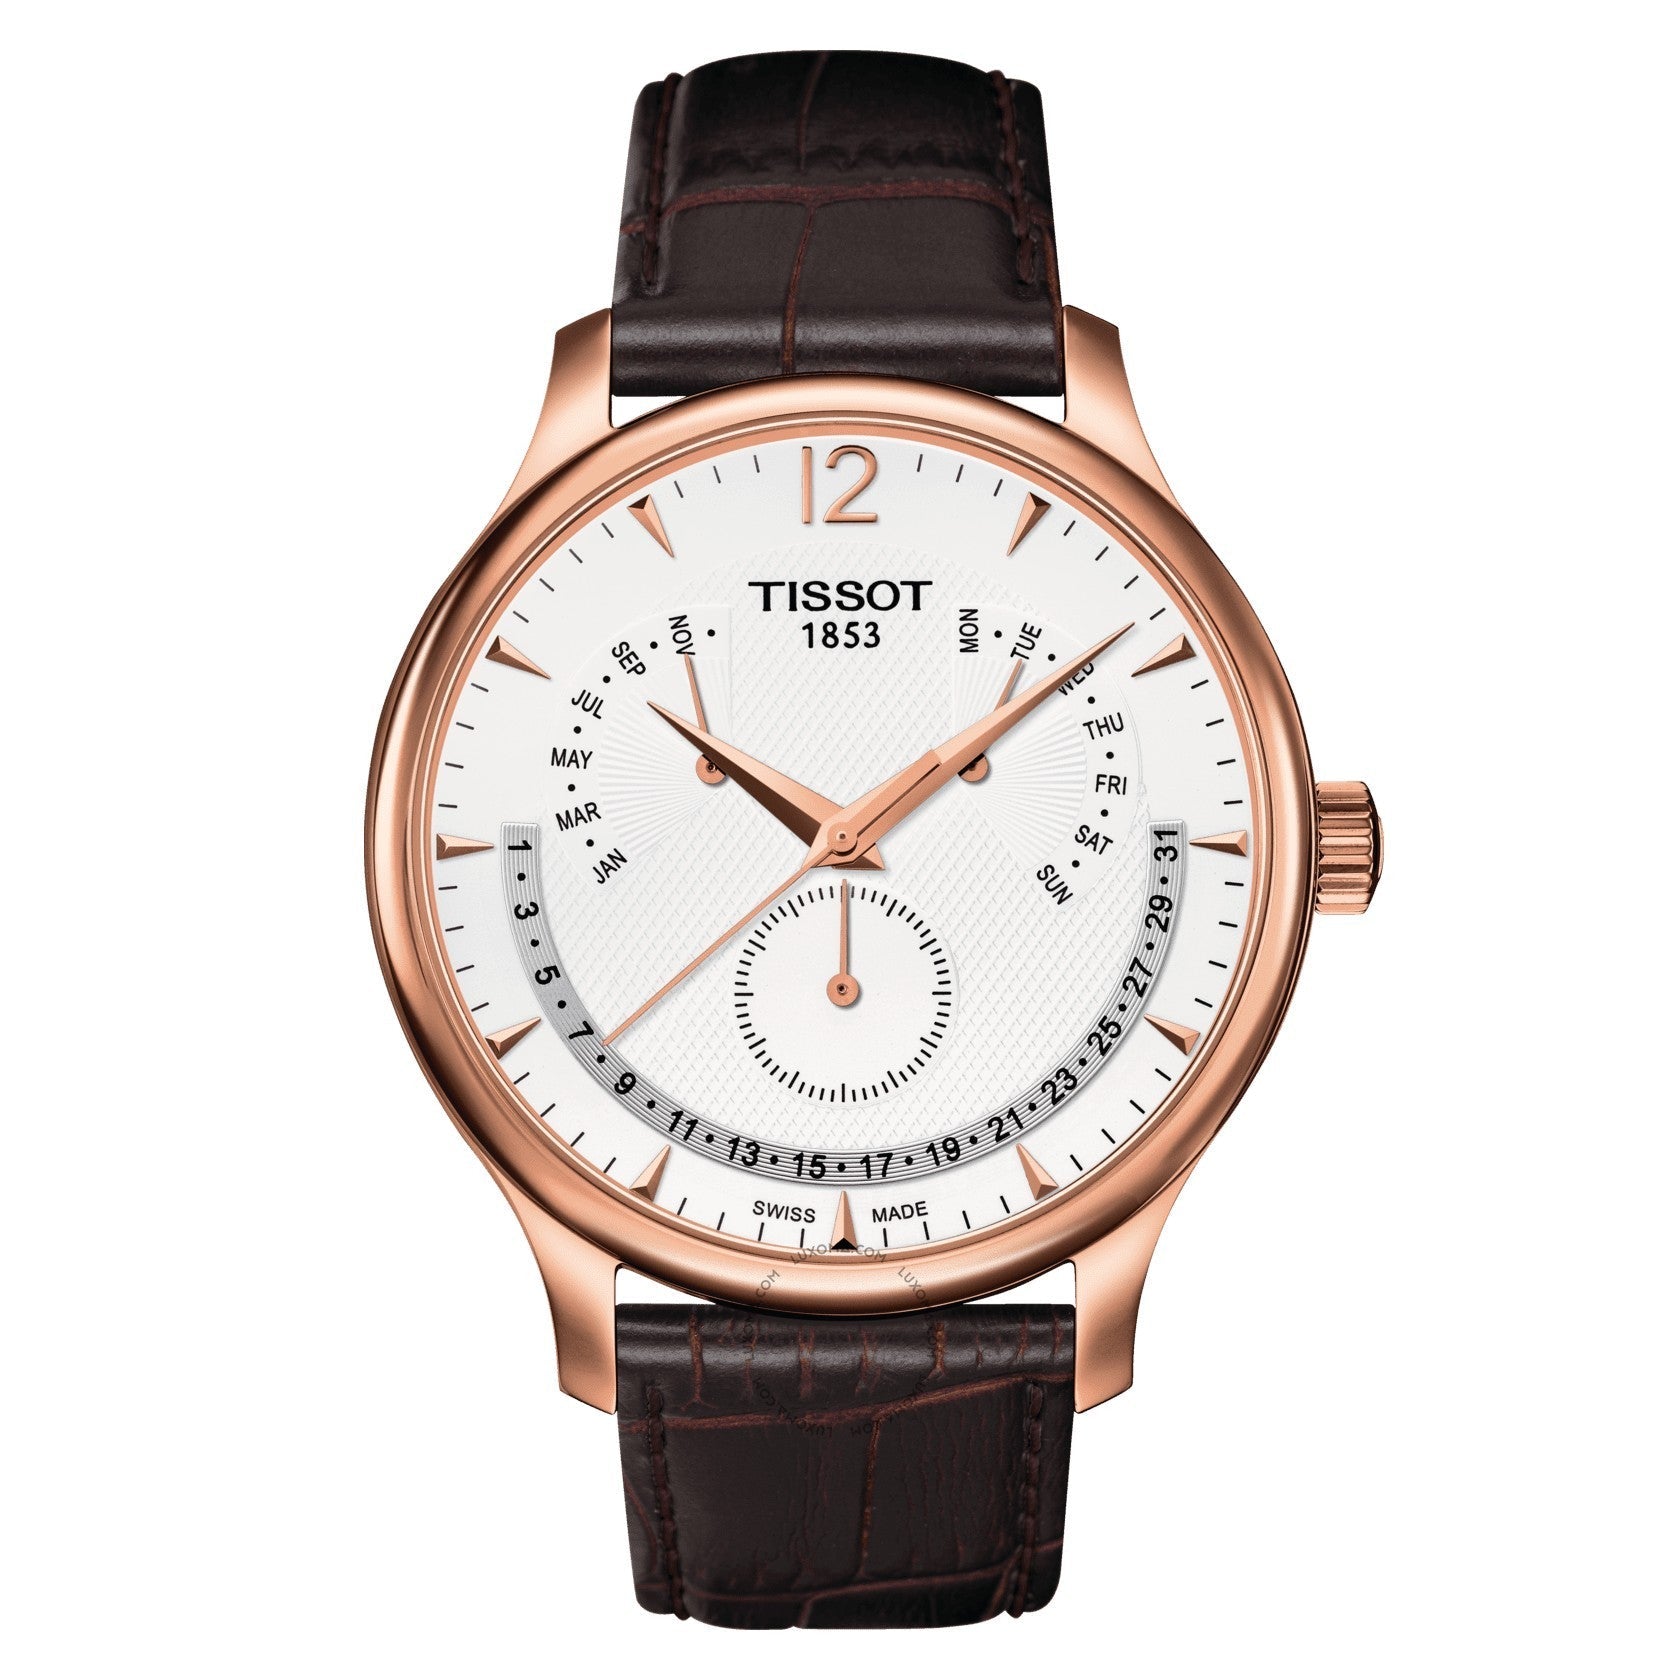 Tissot Tradition Perpetual Calendar Quartz White Dial Men's Watch T063.637.36.037.00